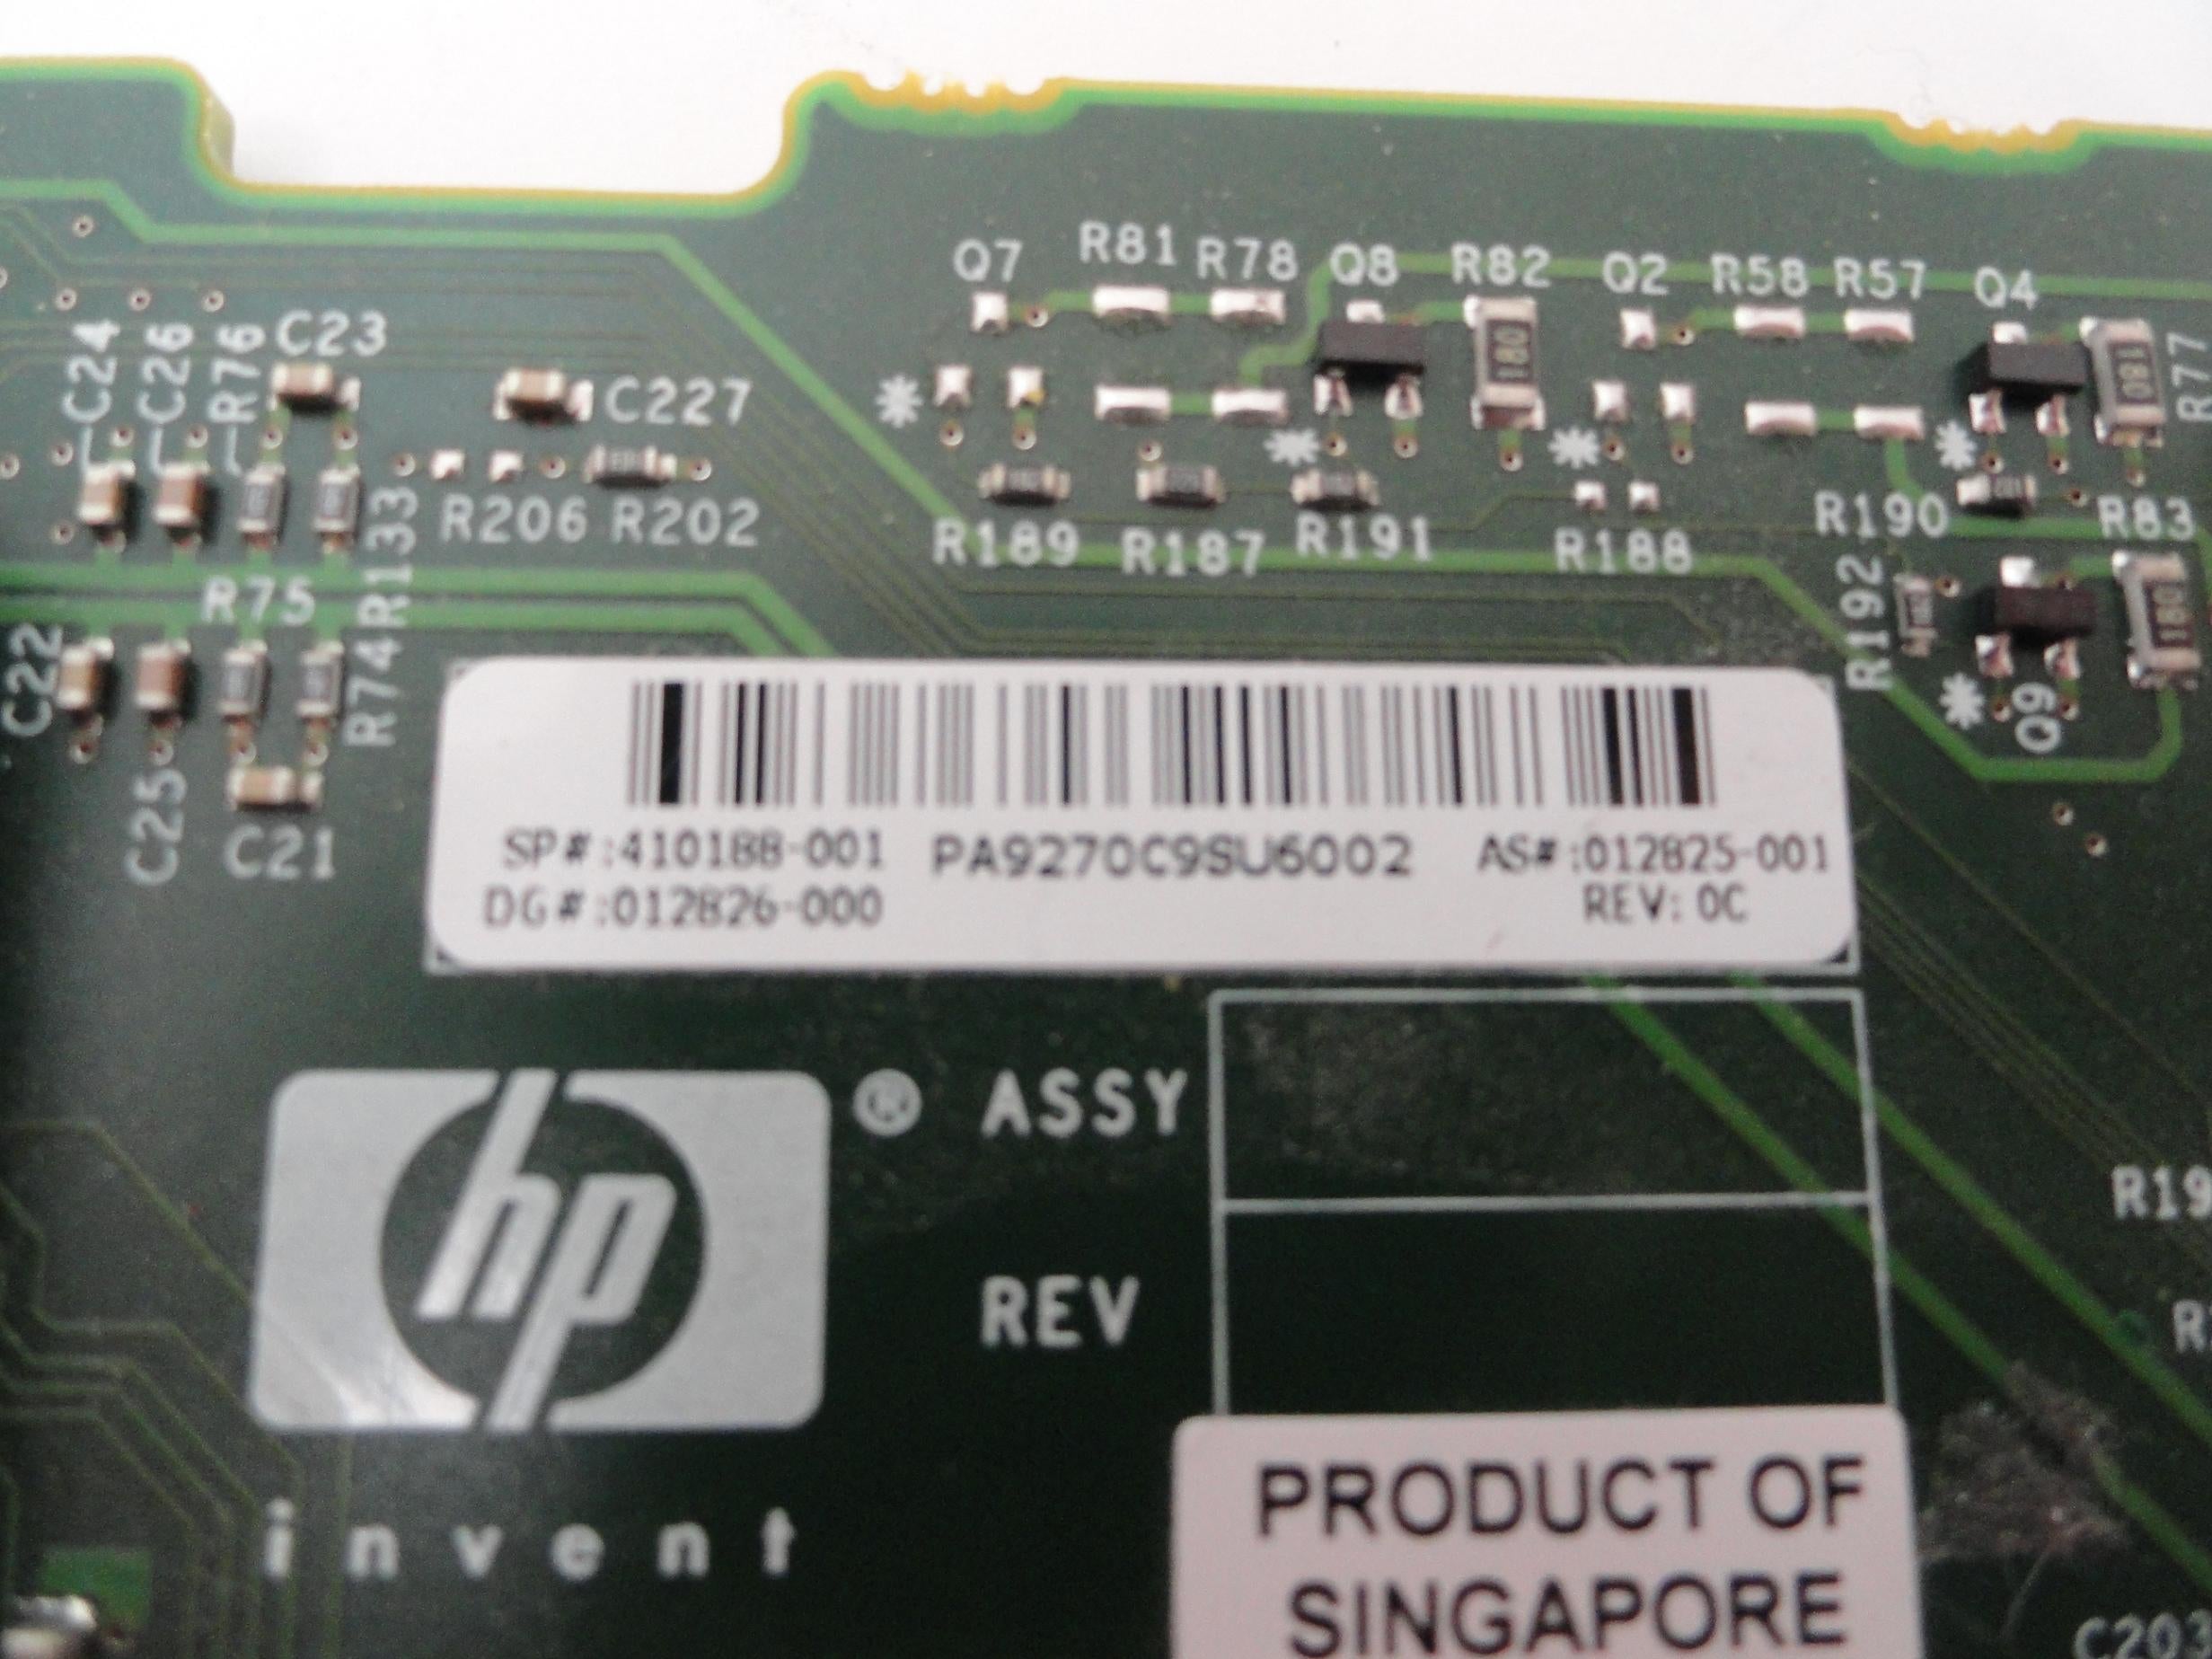 PR16525_012825-001_HP Memory Installation board from DL580 G4 Server - Image2